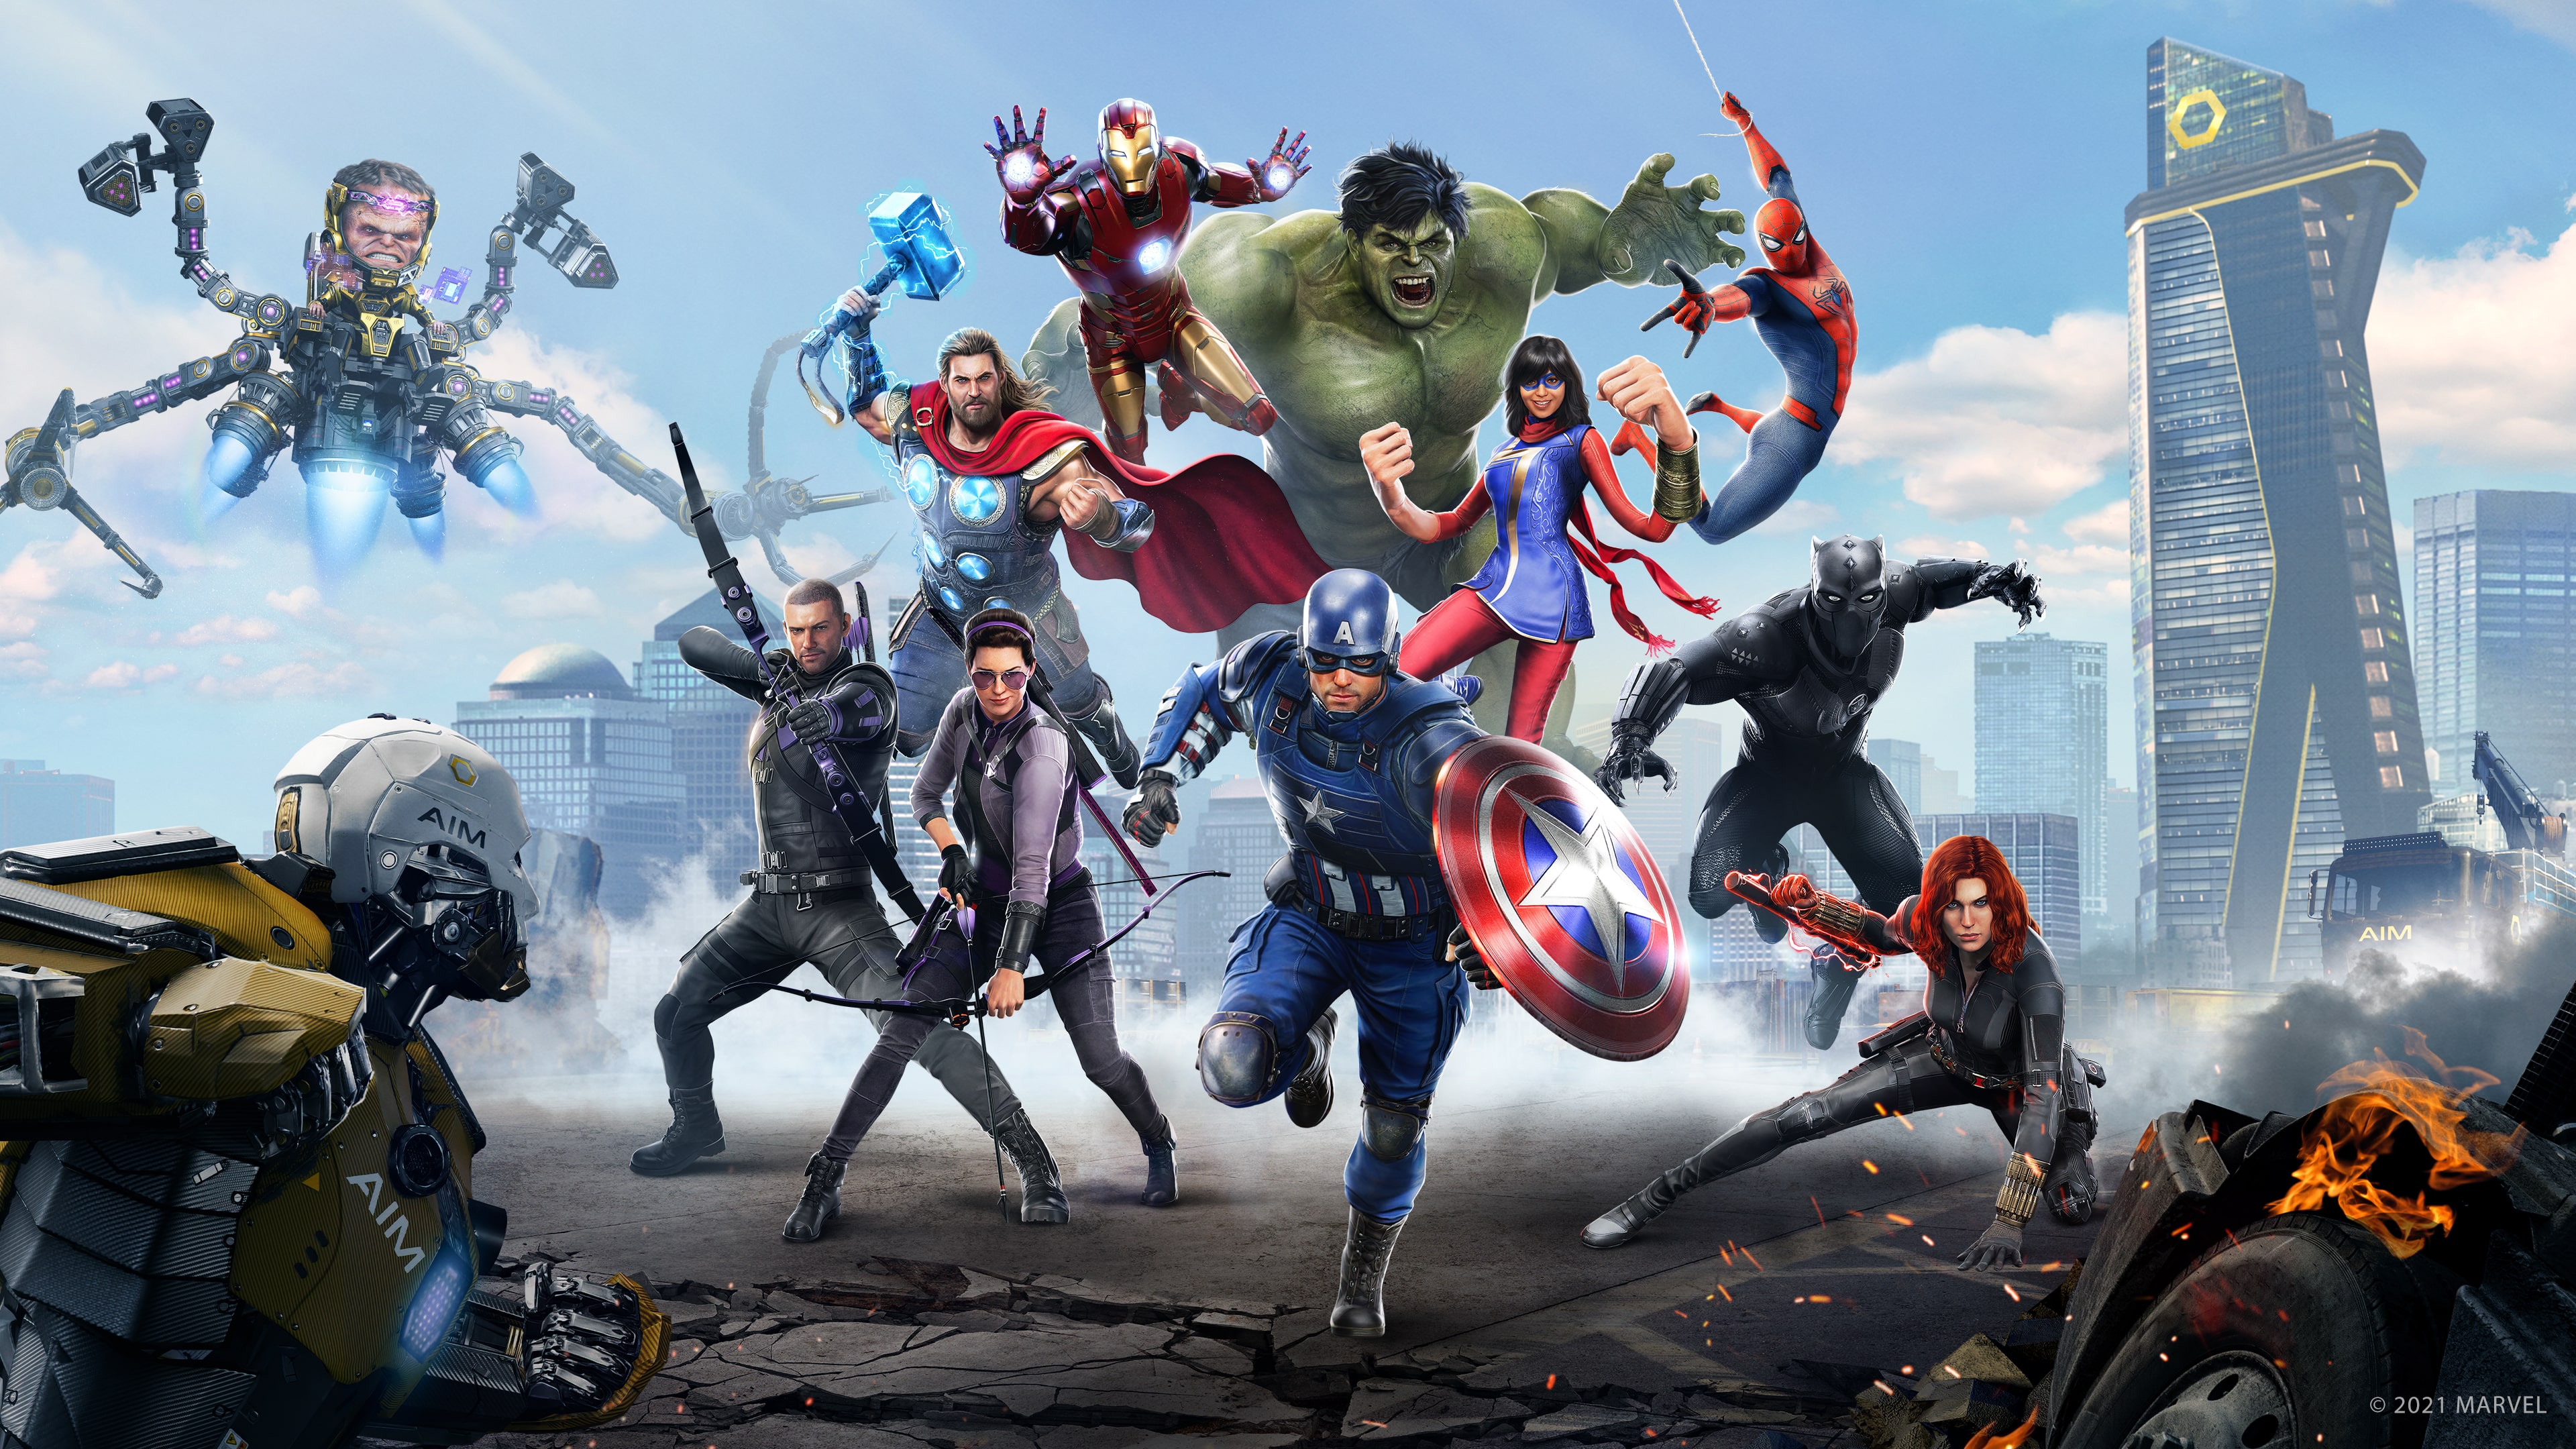 Marvel's Avengers (English)